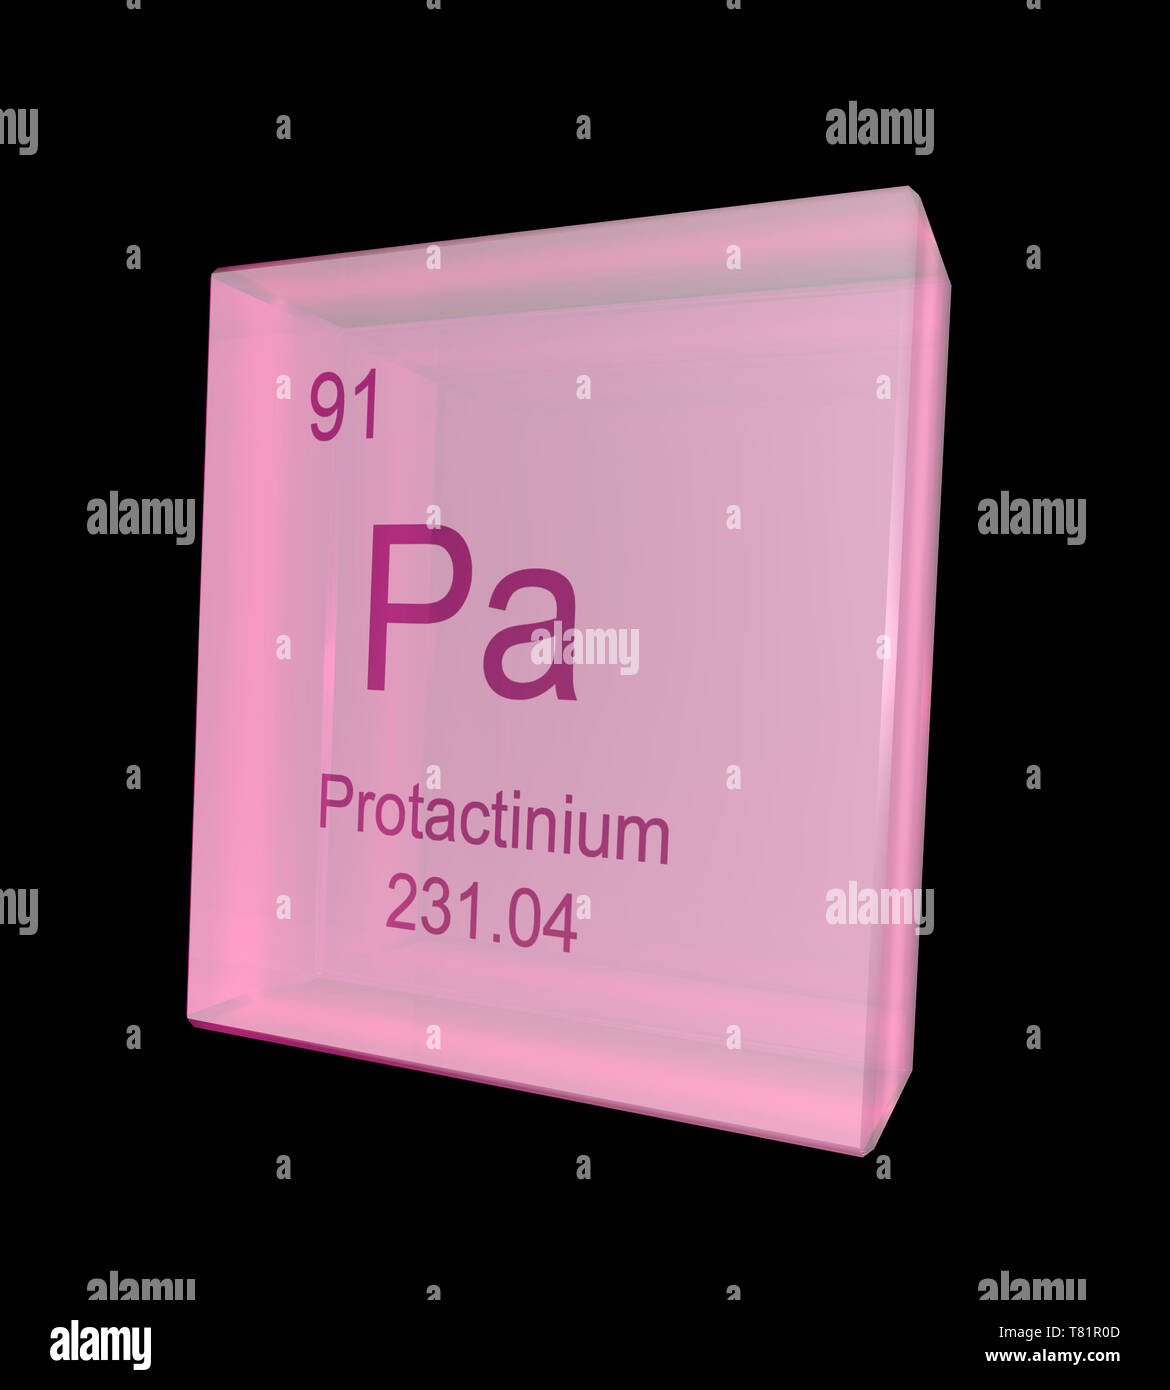 Protactinium, Chemical Element Symbol, Illustration Stock Photo